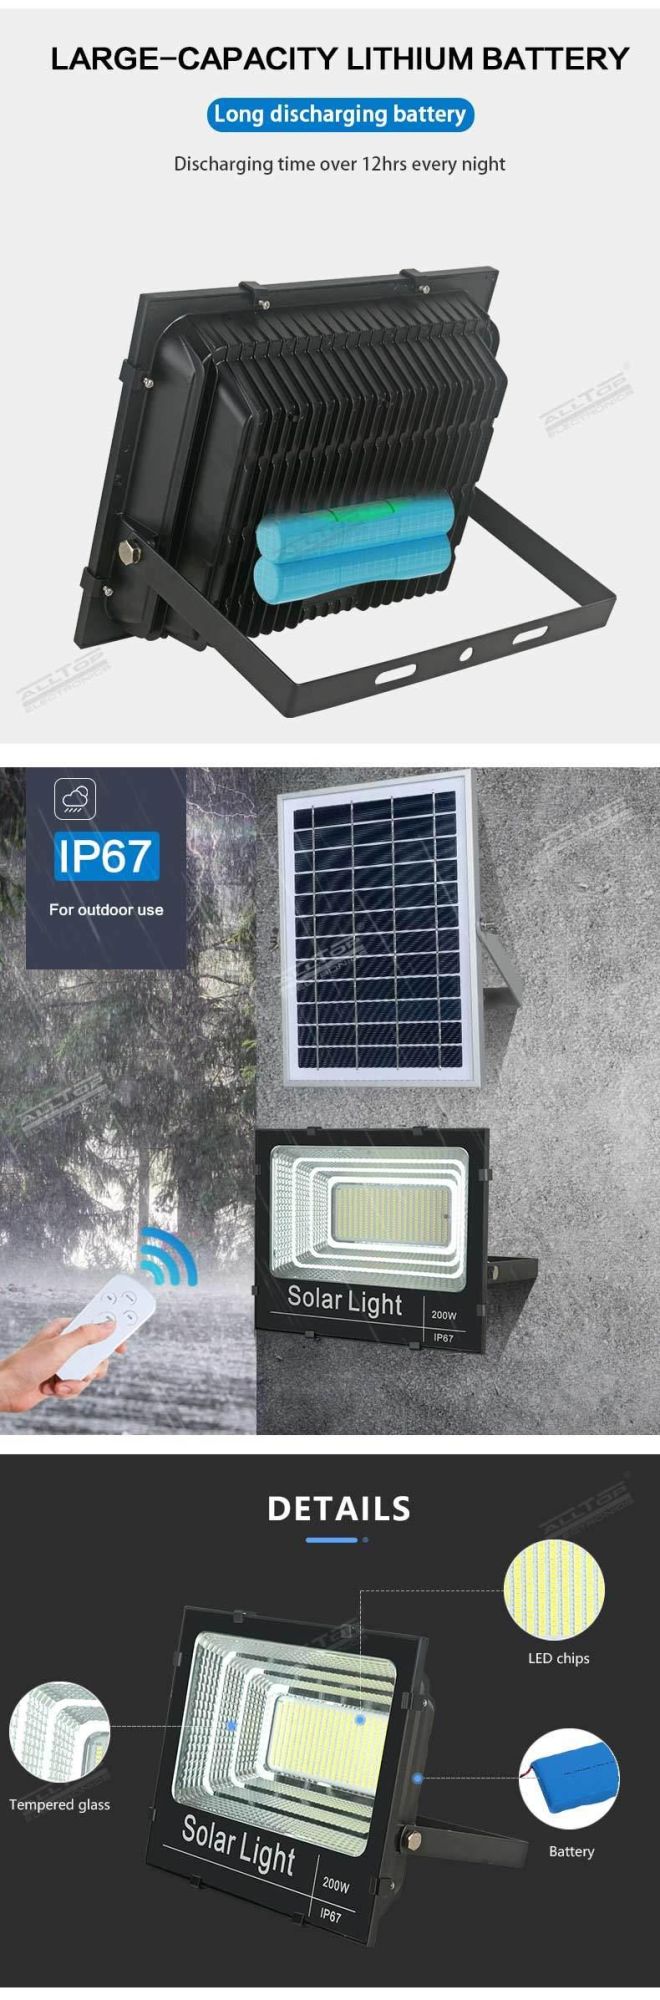 Alltop High Power Modular 25W 40W 60W 100W 200W 300W Waterproof IP67 Outdoor Solar Panel LED Floodlight